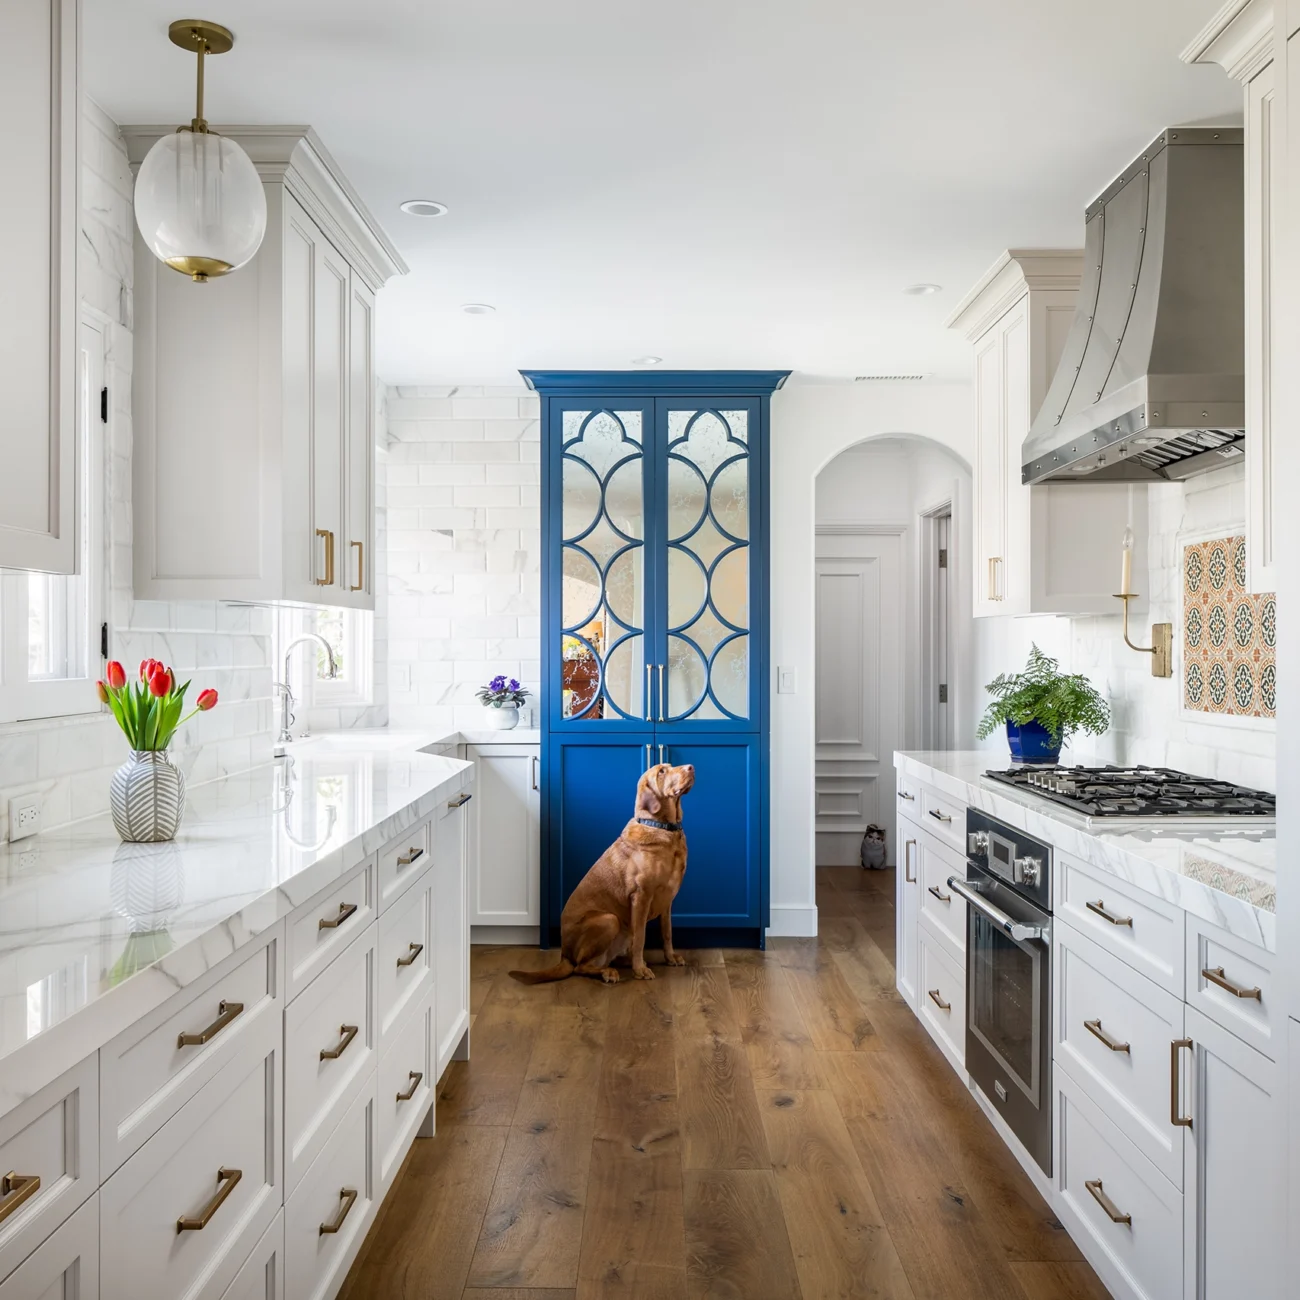 Christine Vroom Interiors | Via-Arriba | Bright white kitchen with bright blue door